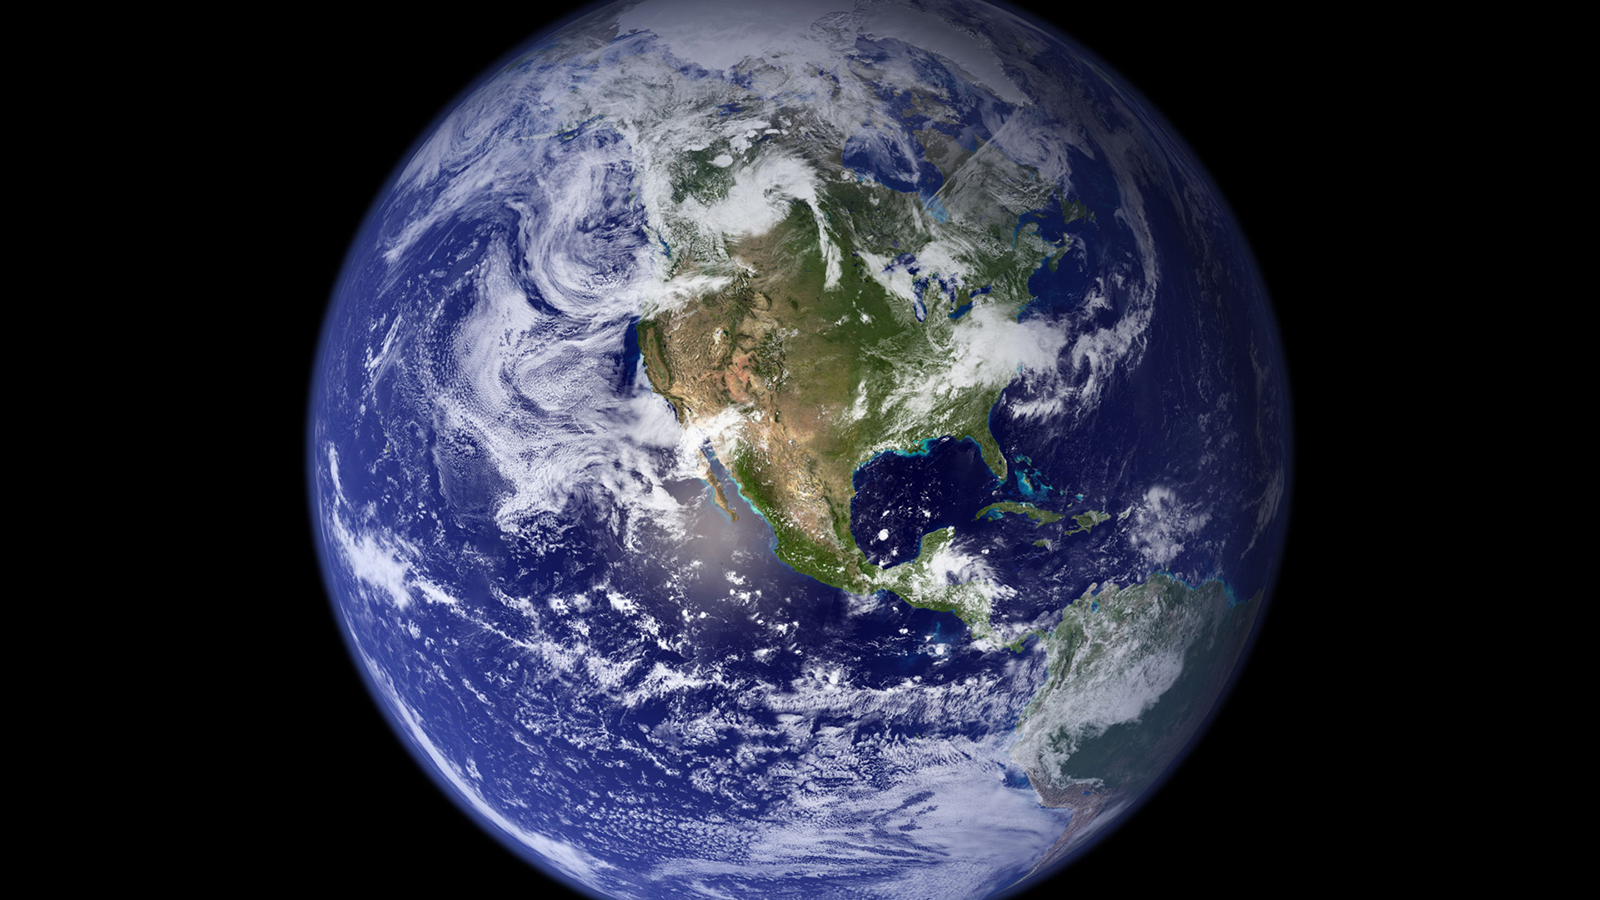 slide 2 - Image of Earth